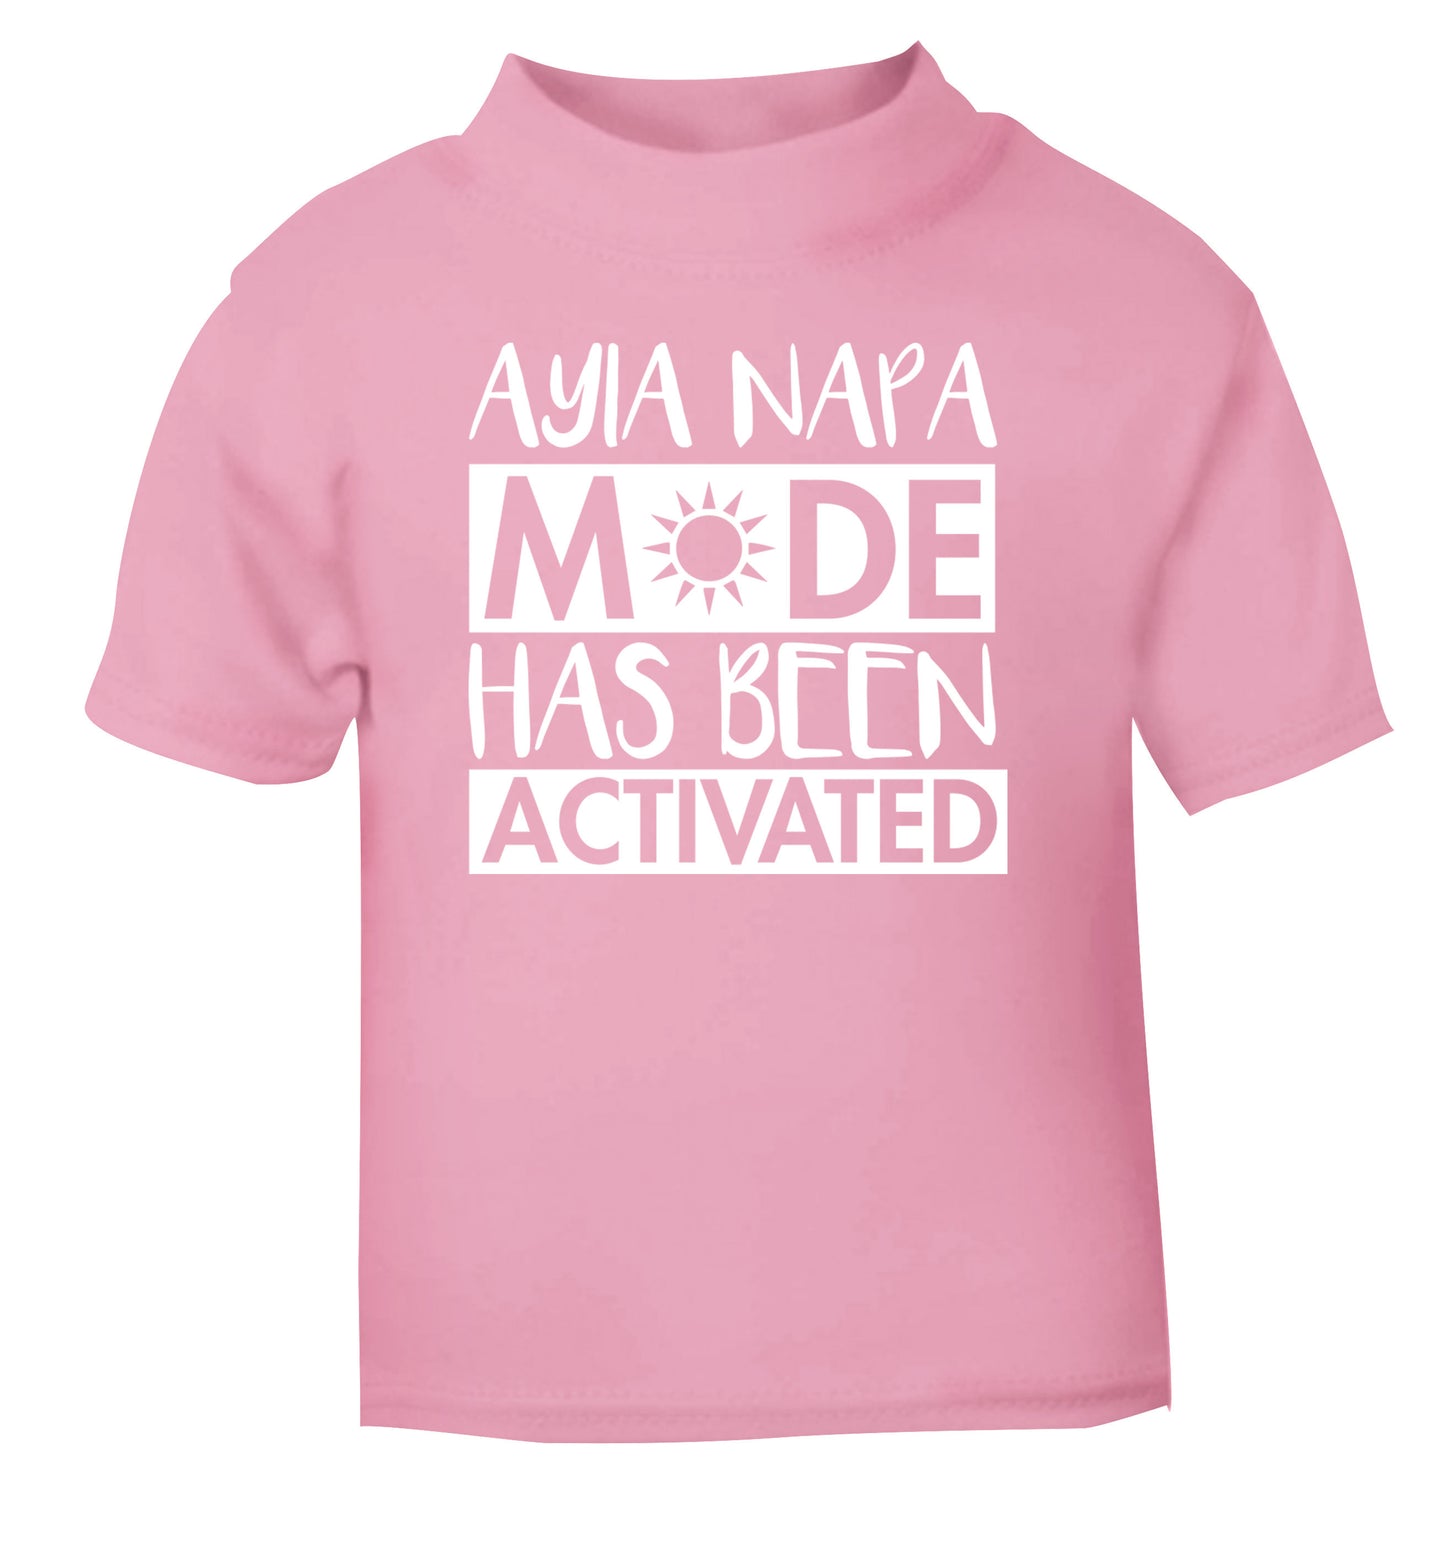 Aiya Napa mode has been activated light pink Baby Toddler Tshirt 2 Years